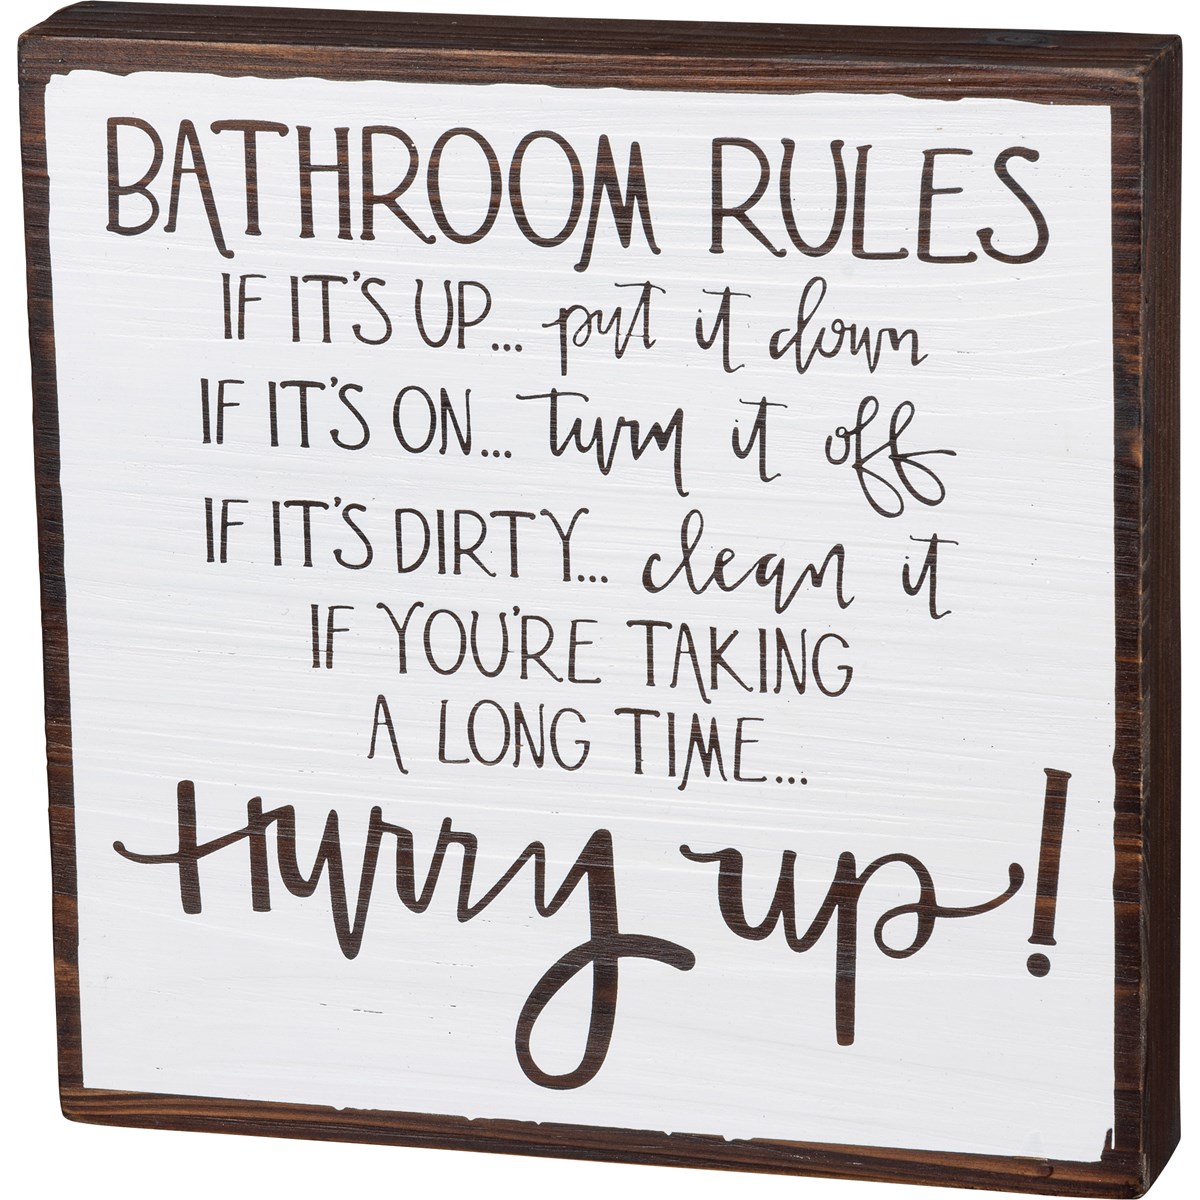 Bathroom Rules Hurry Up Box Sign - Wood